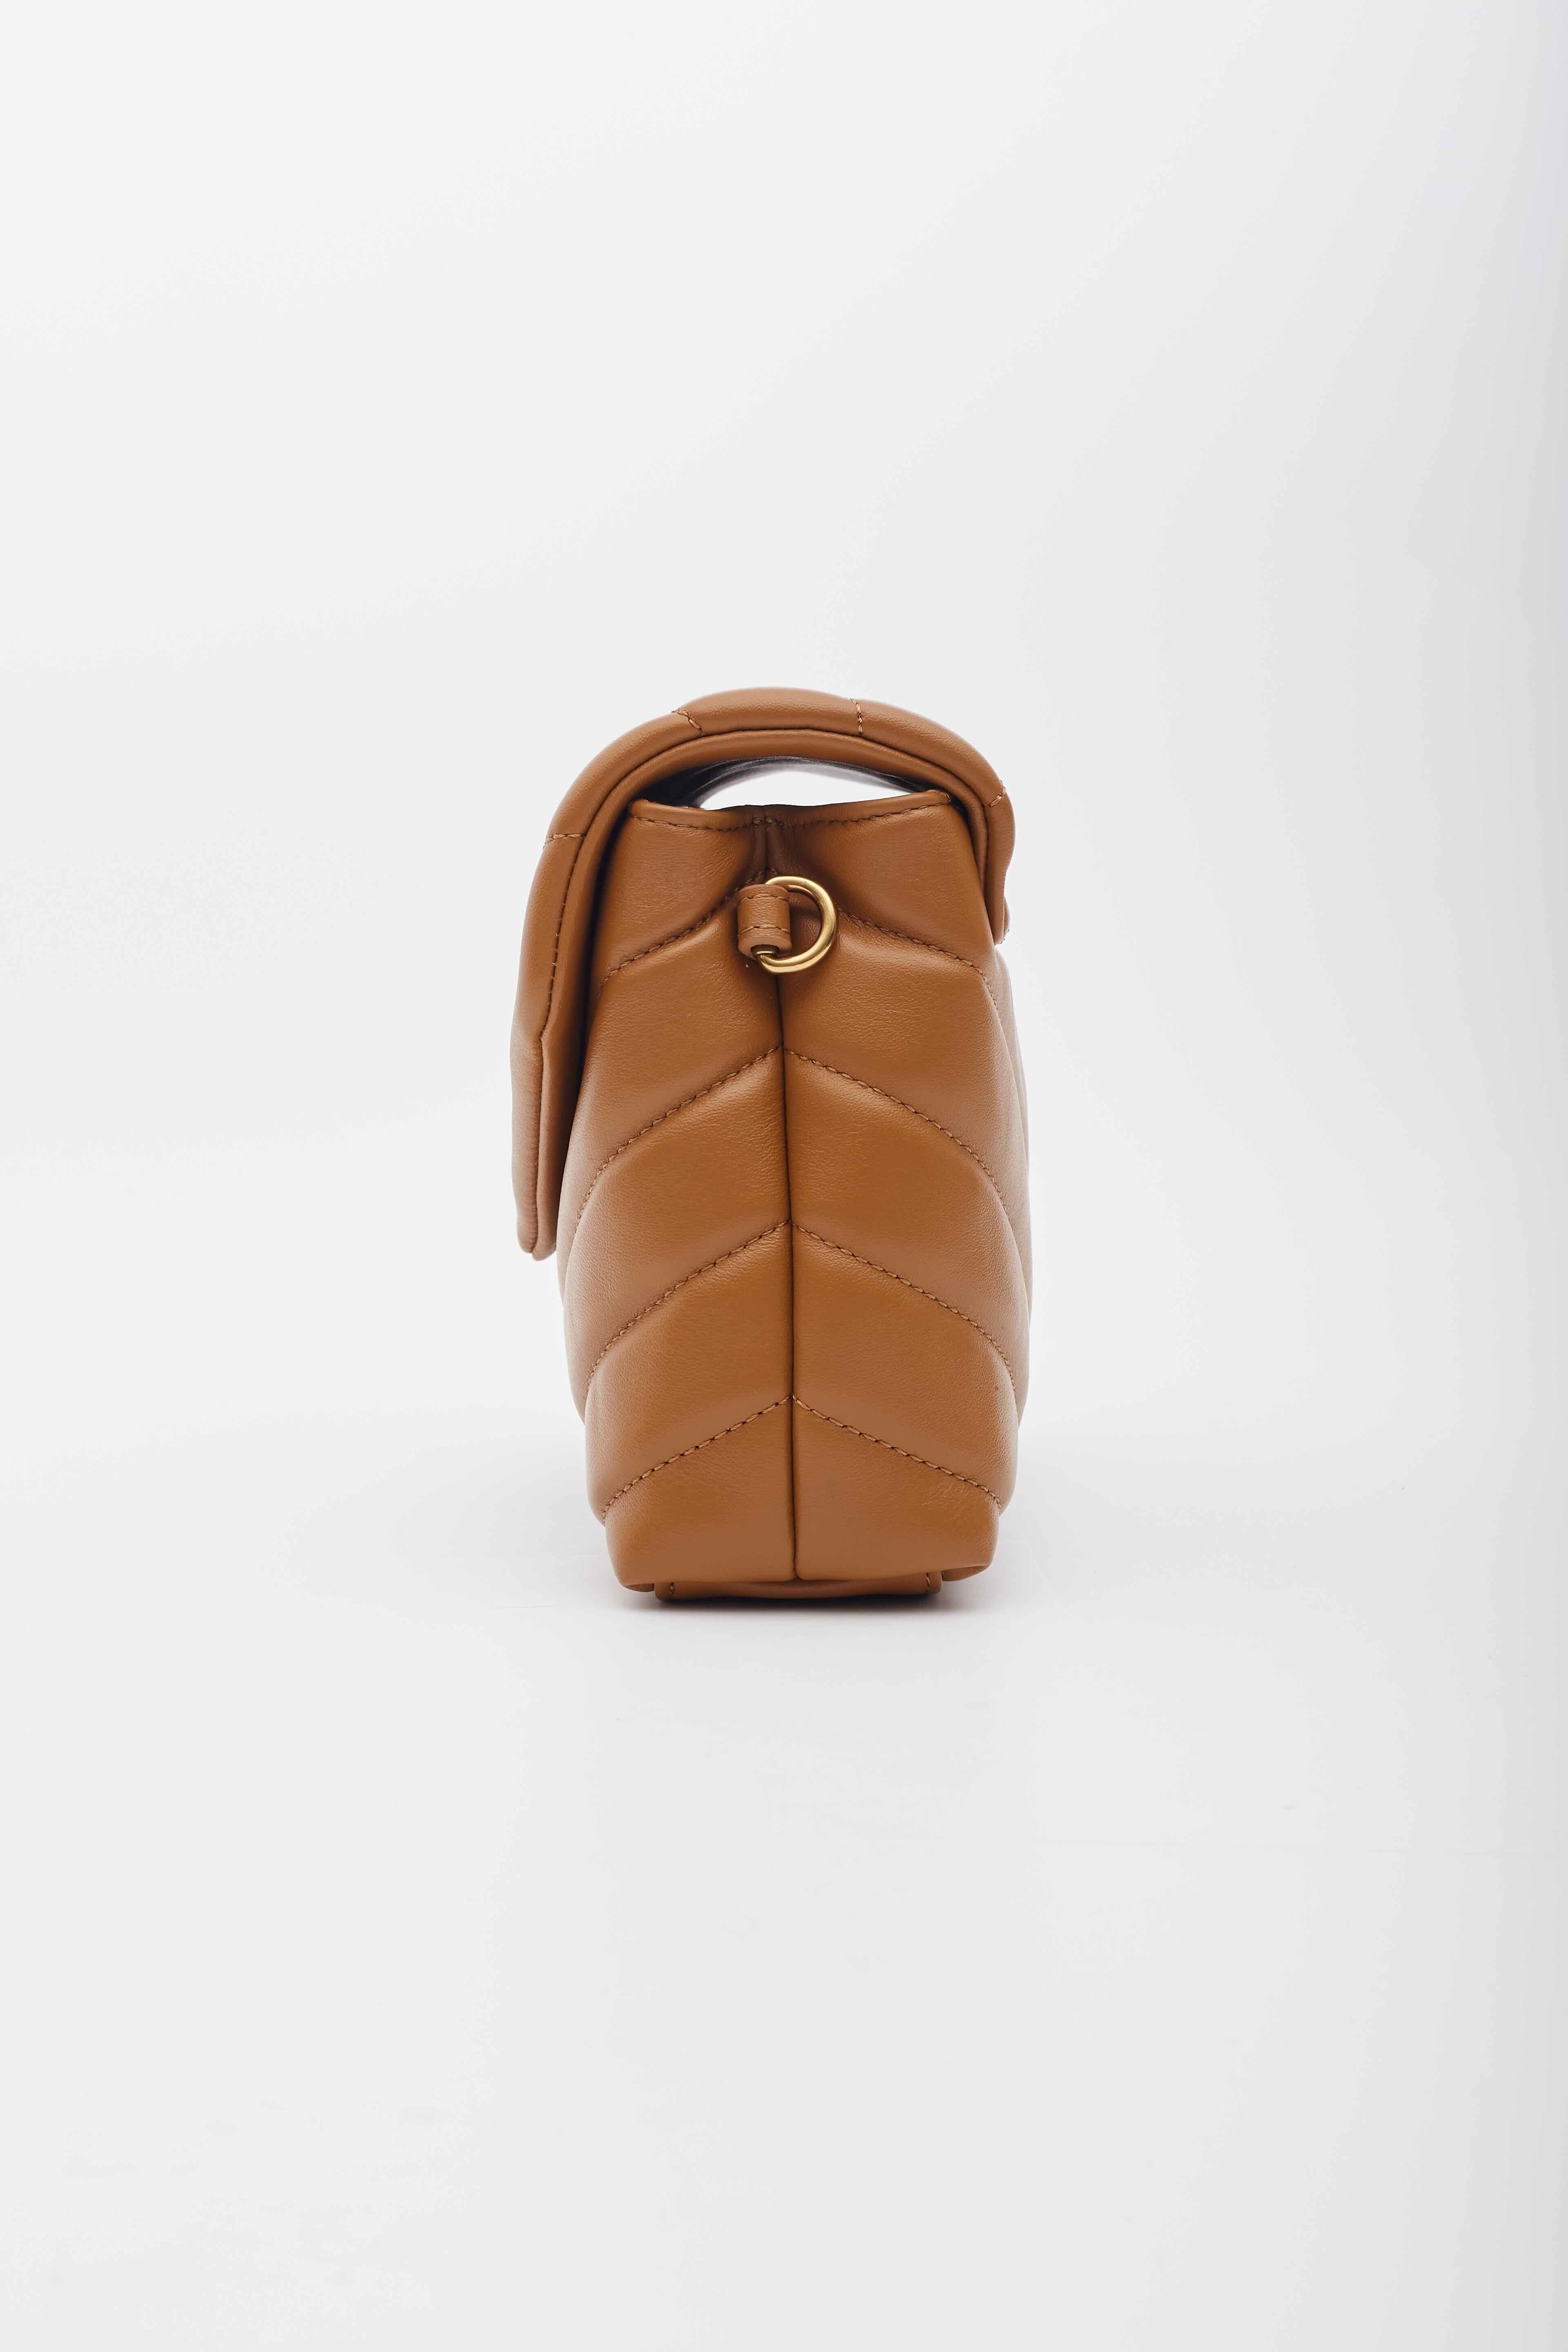 Brown Saint Laurent Calfskin Tan Toy Loulou Bag Gold Hardware For Sale